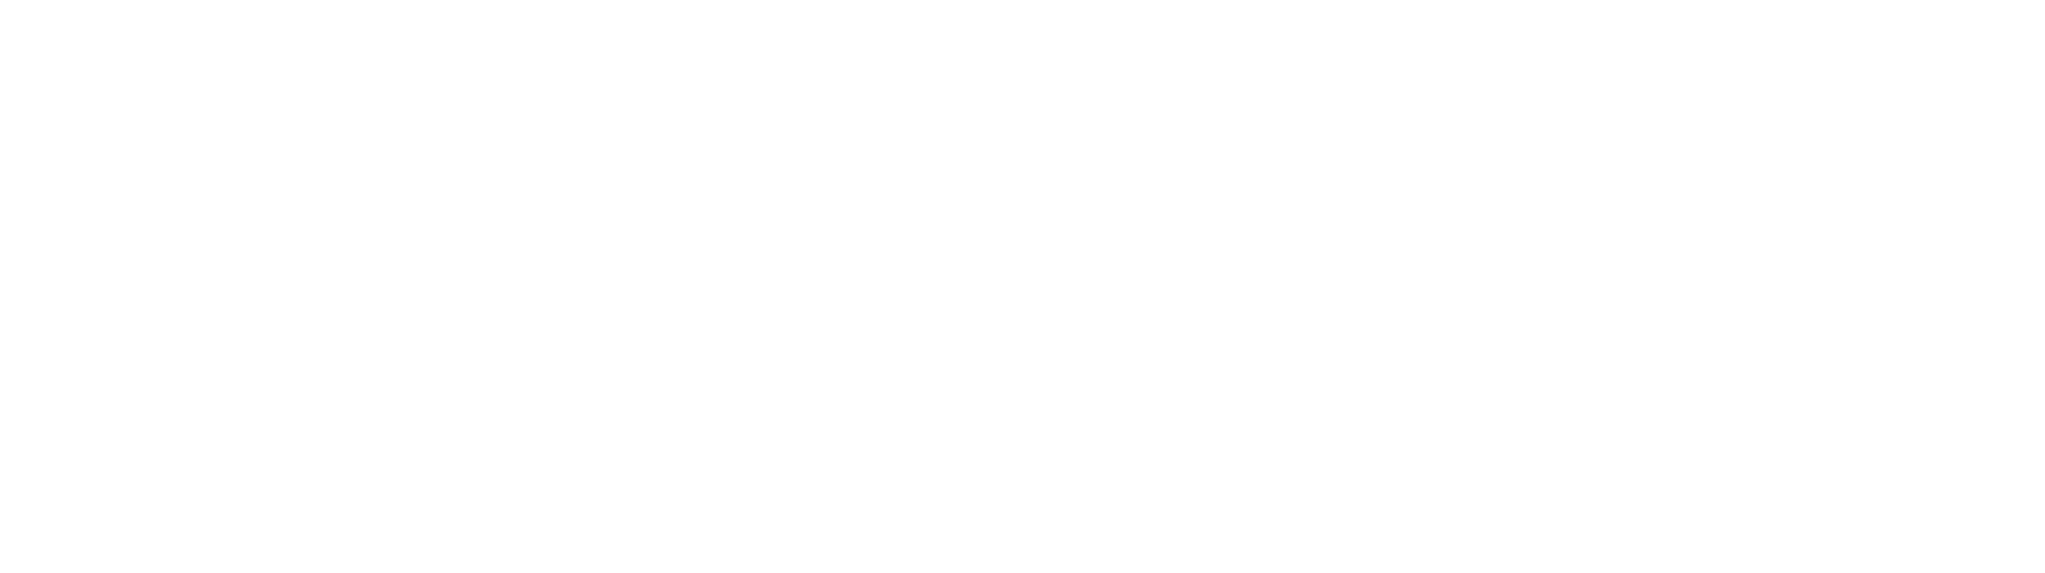 Rabe logo wit